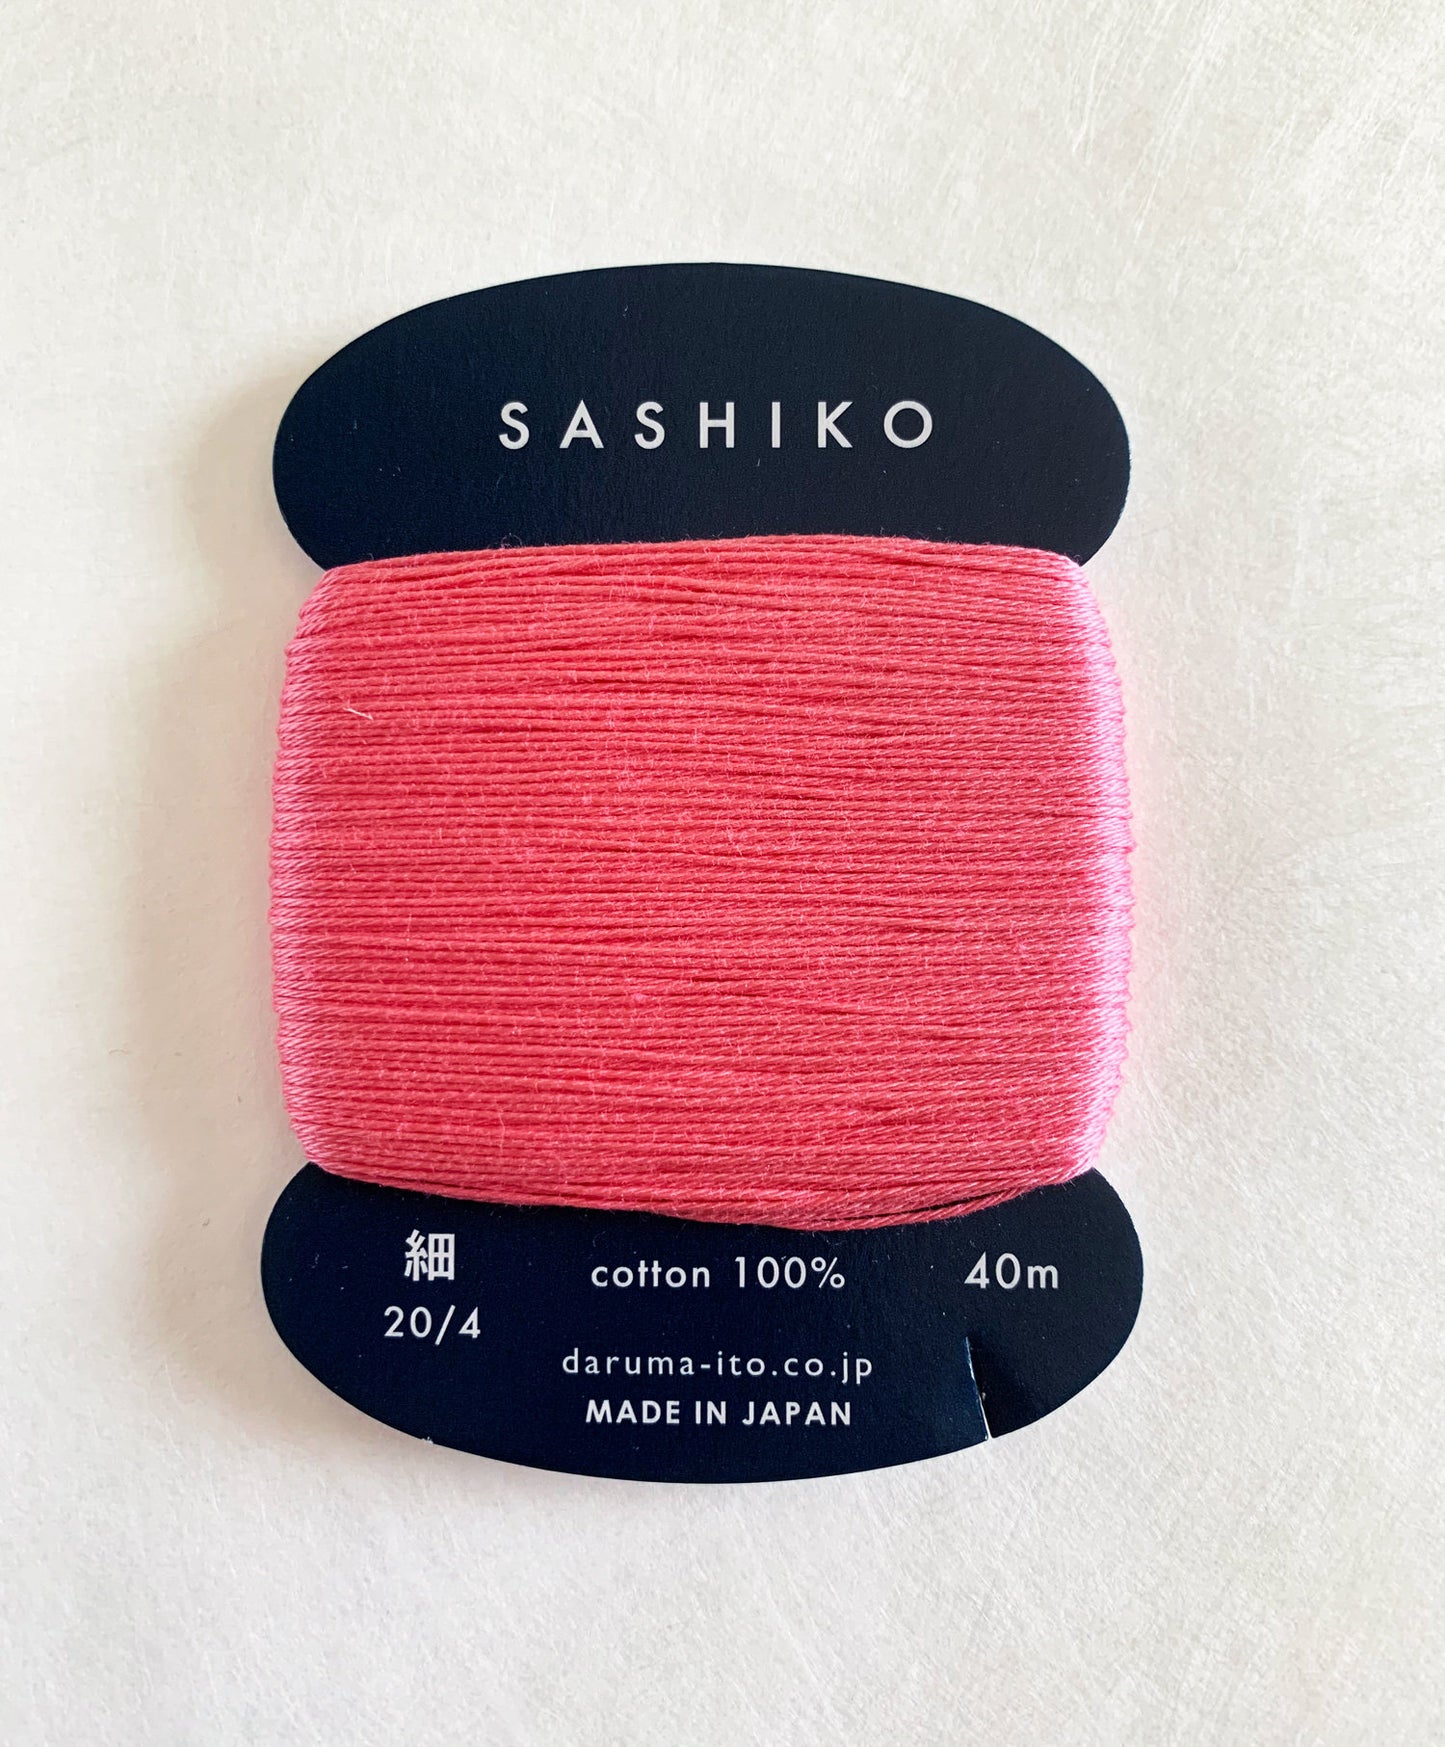 Daruma #222 APRICOT Japanese Cotton SASHIKO thread 40 meter skein 20/4 梅 pink